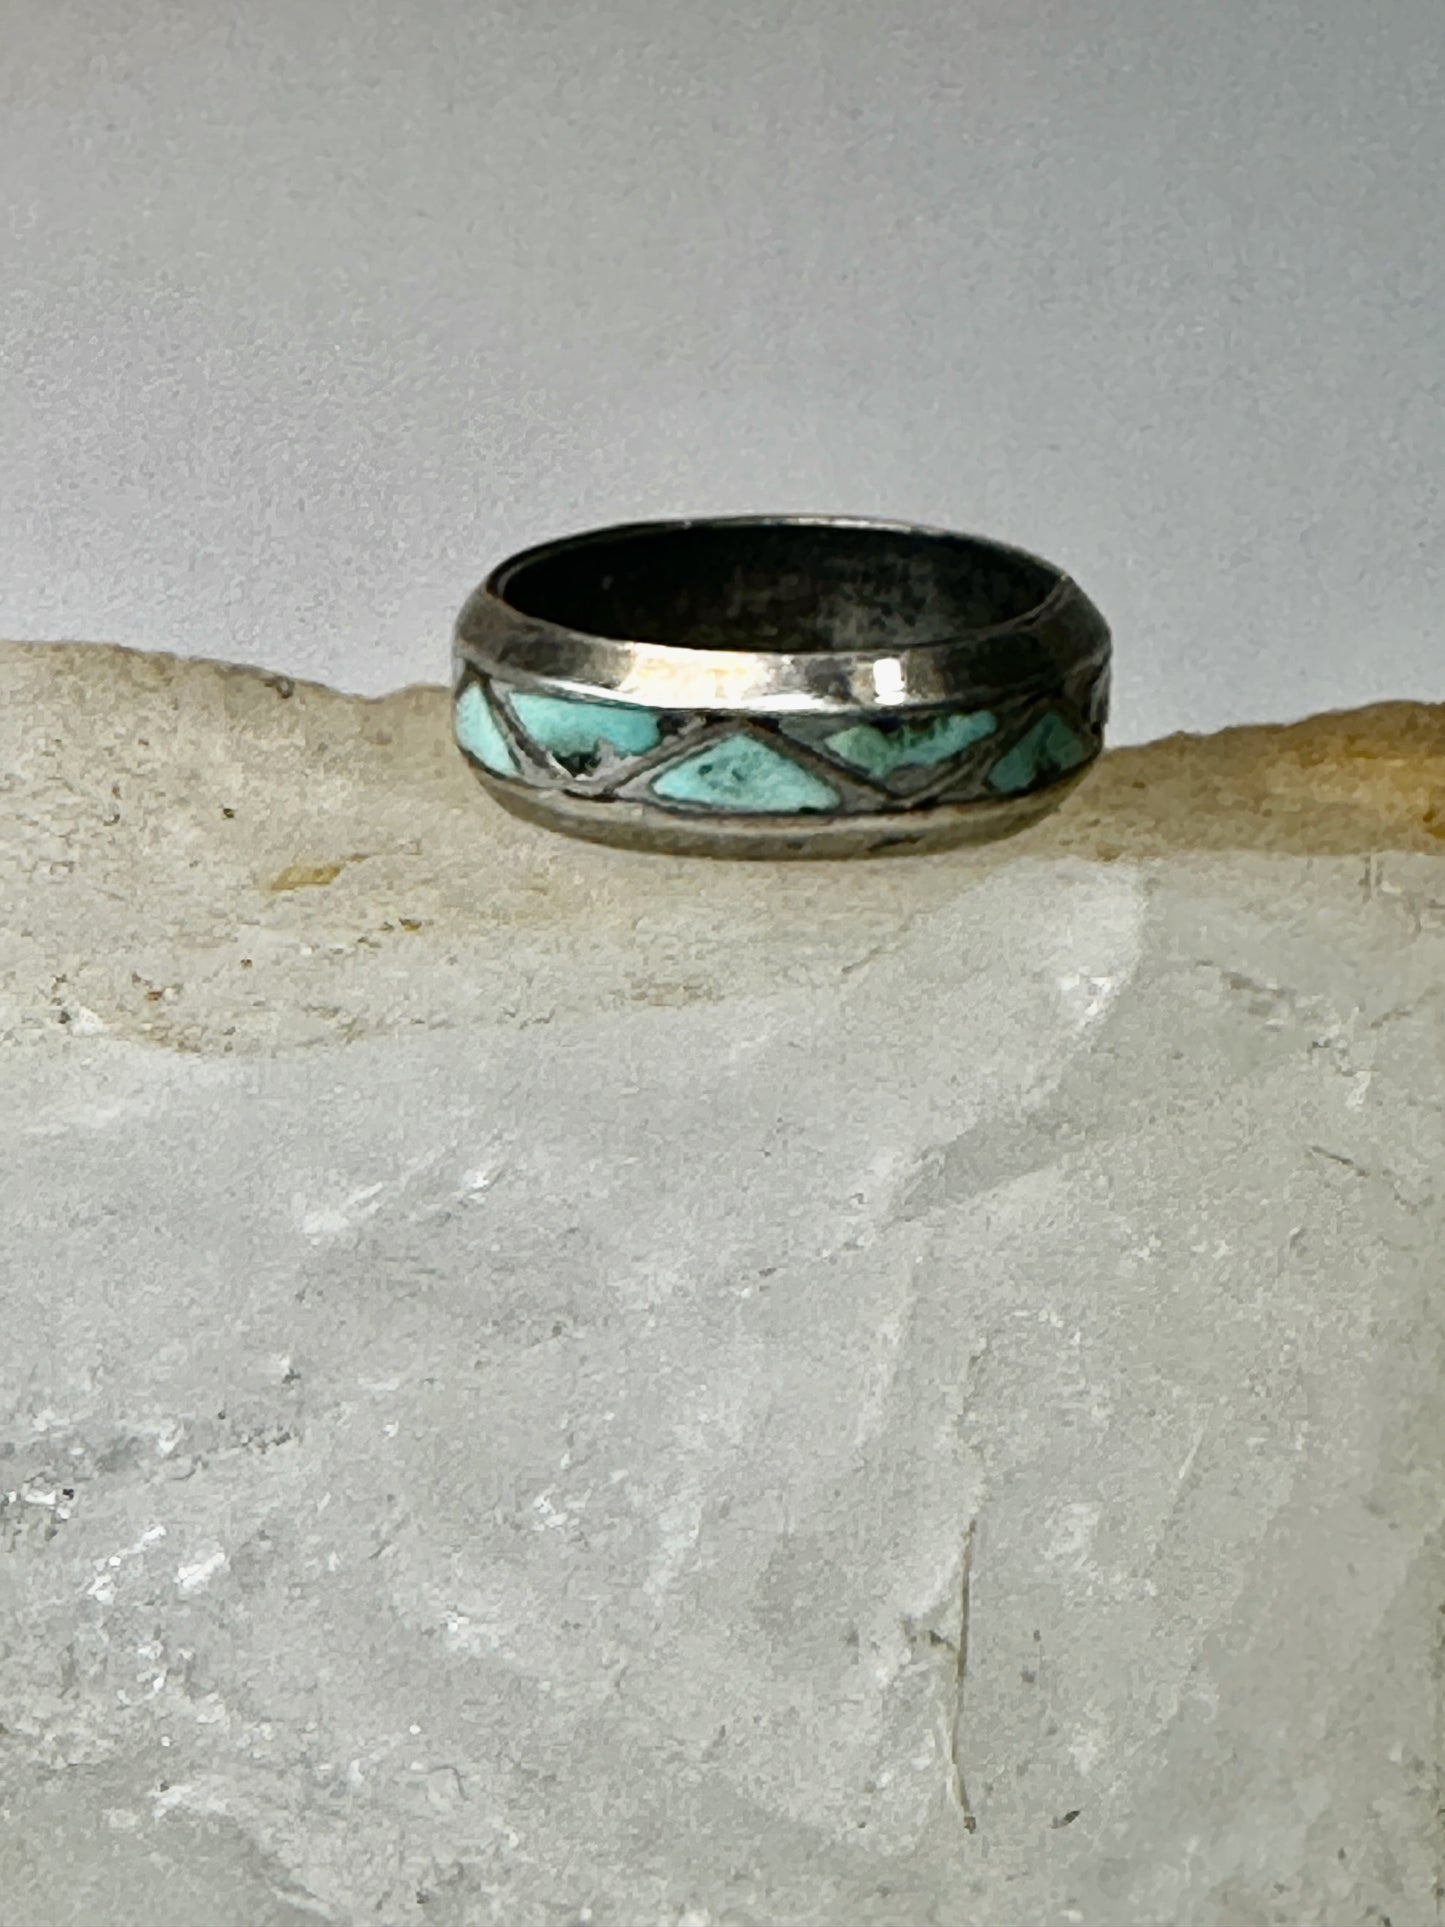 Zuni ring Turquoise wedding band size 6.25 sterling silver women men